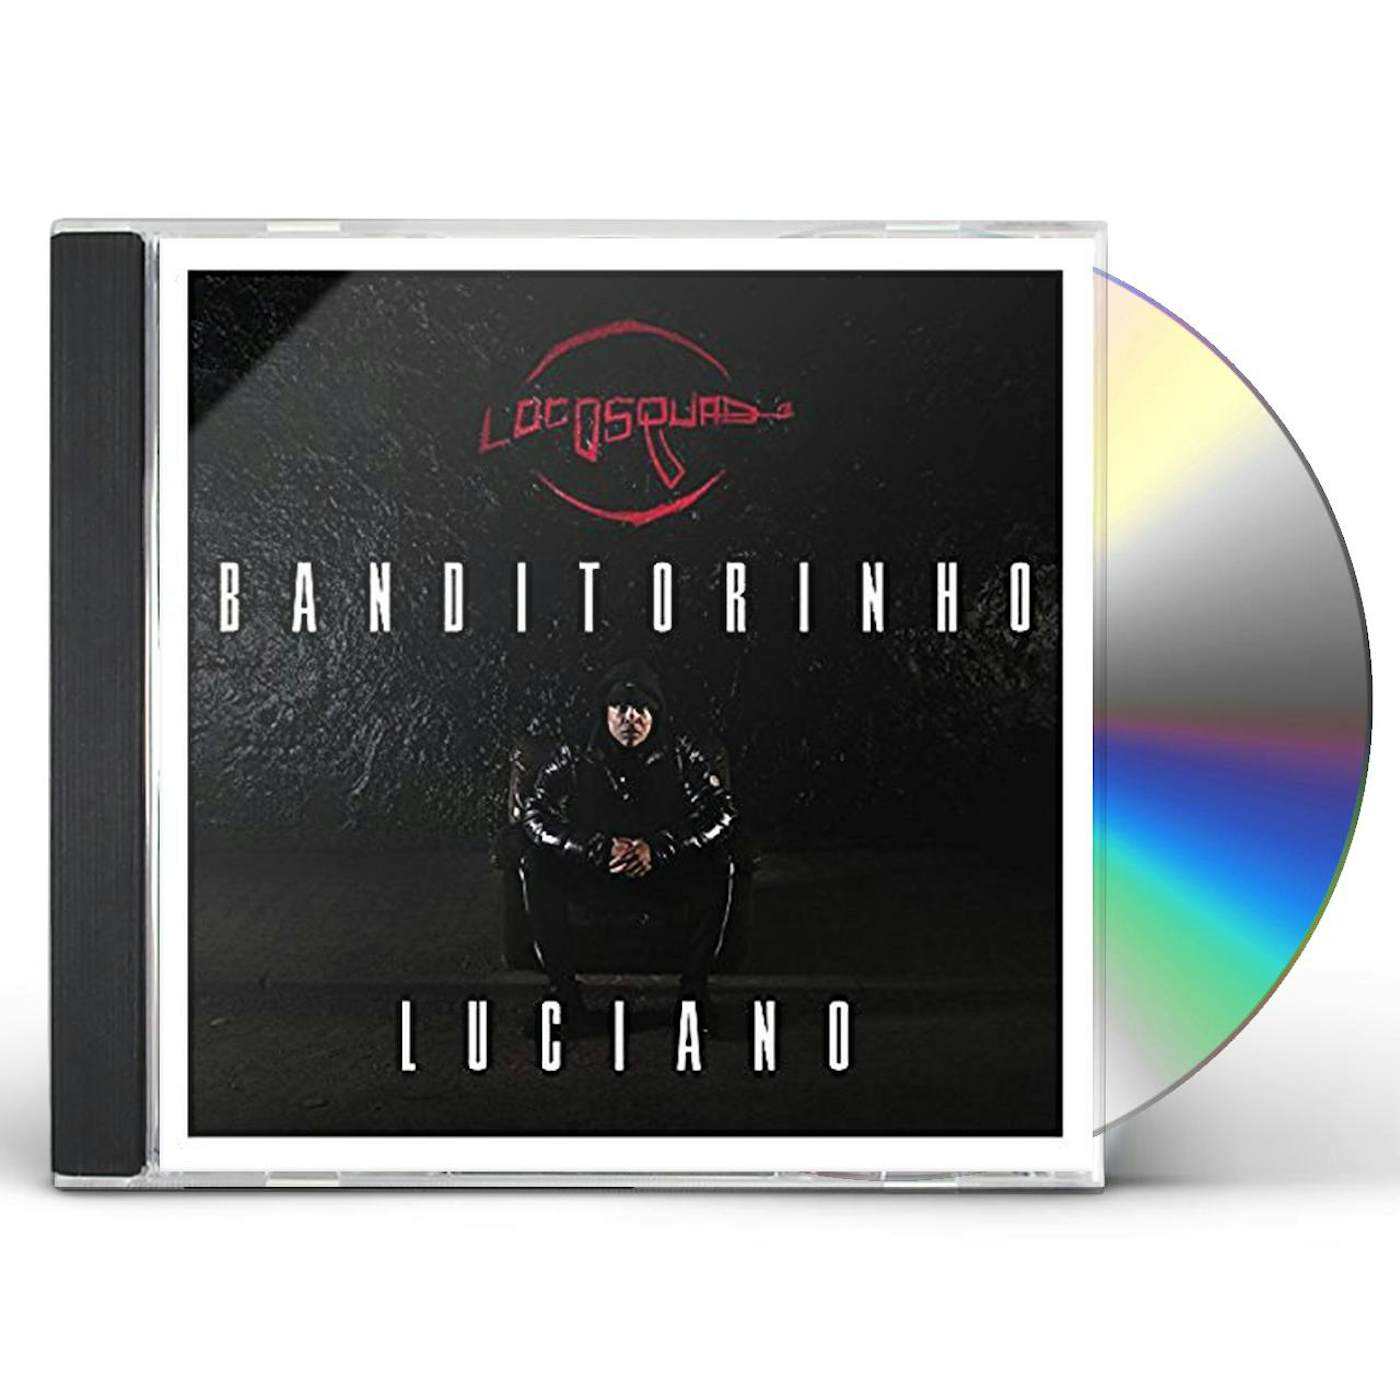 Luciano BANDITORINHO CD